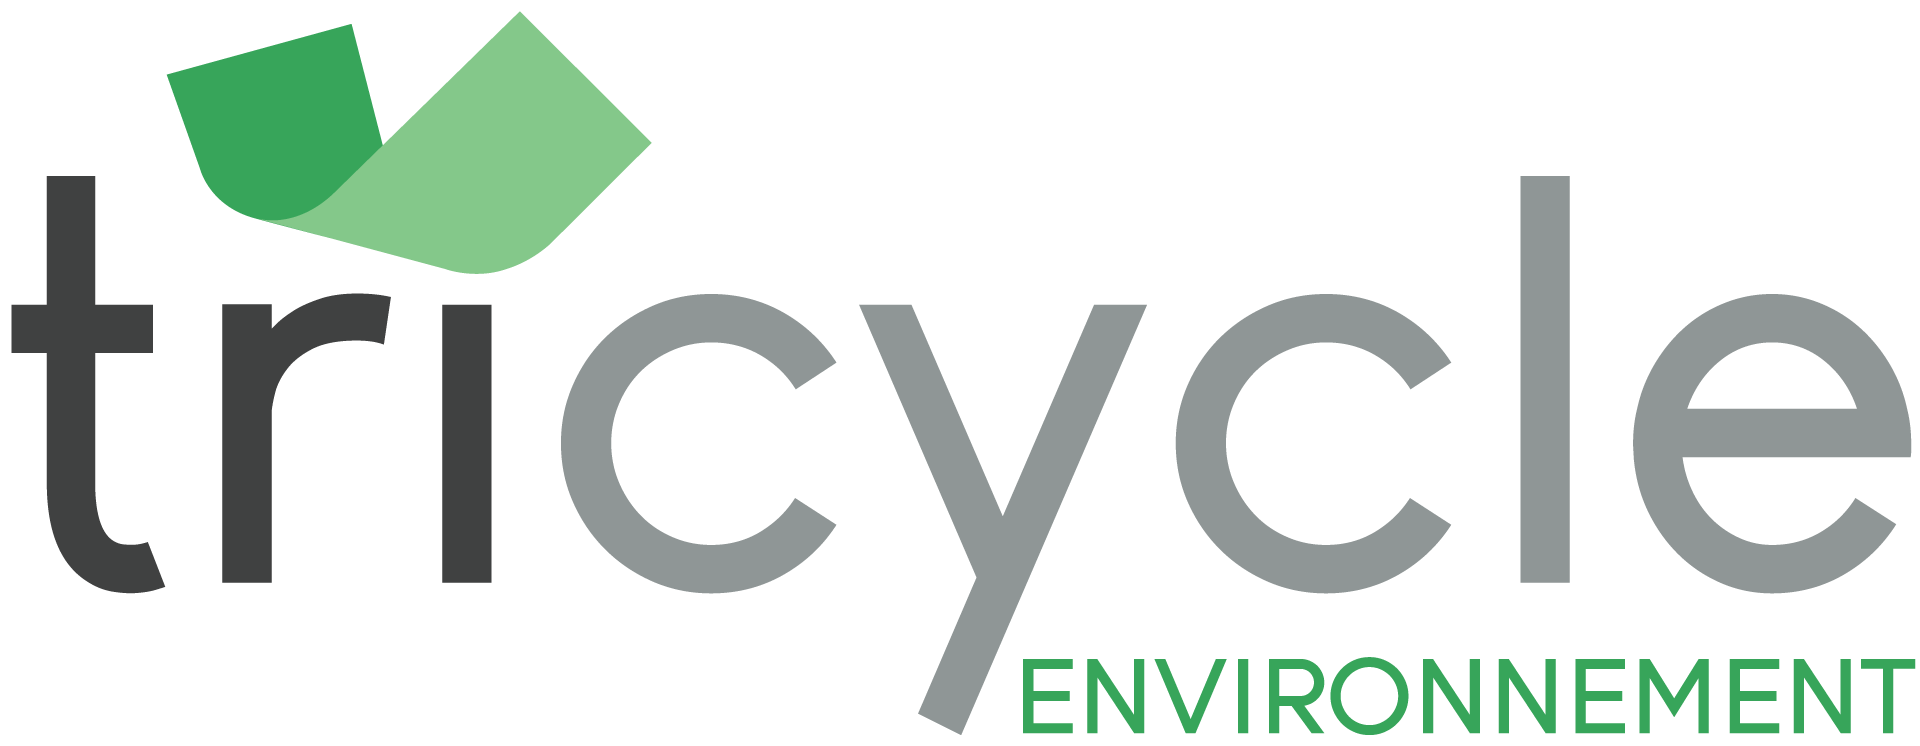 logo-tricycle-environnement-2022-hd-padding-5mm